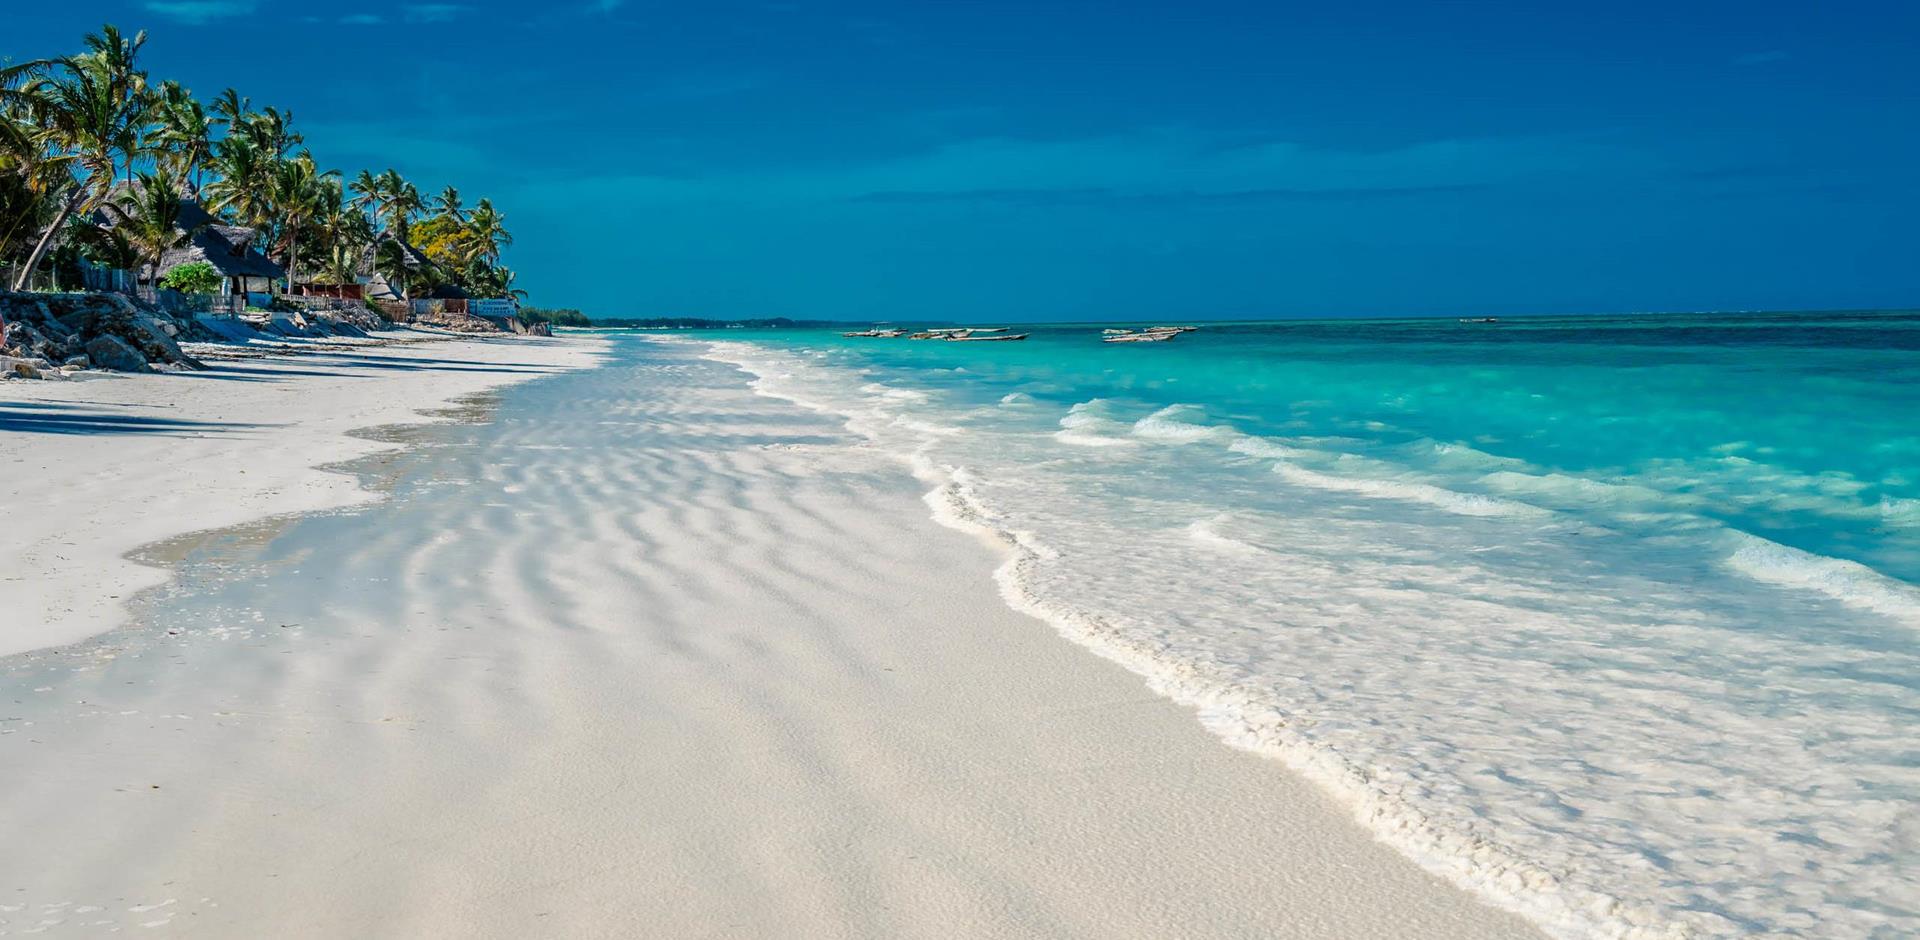 Luxury Zanzibar holidays with Abercrombie & Kent